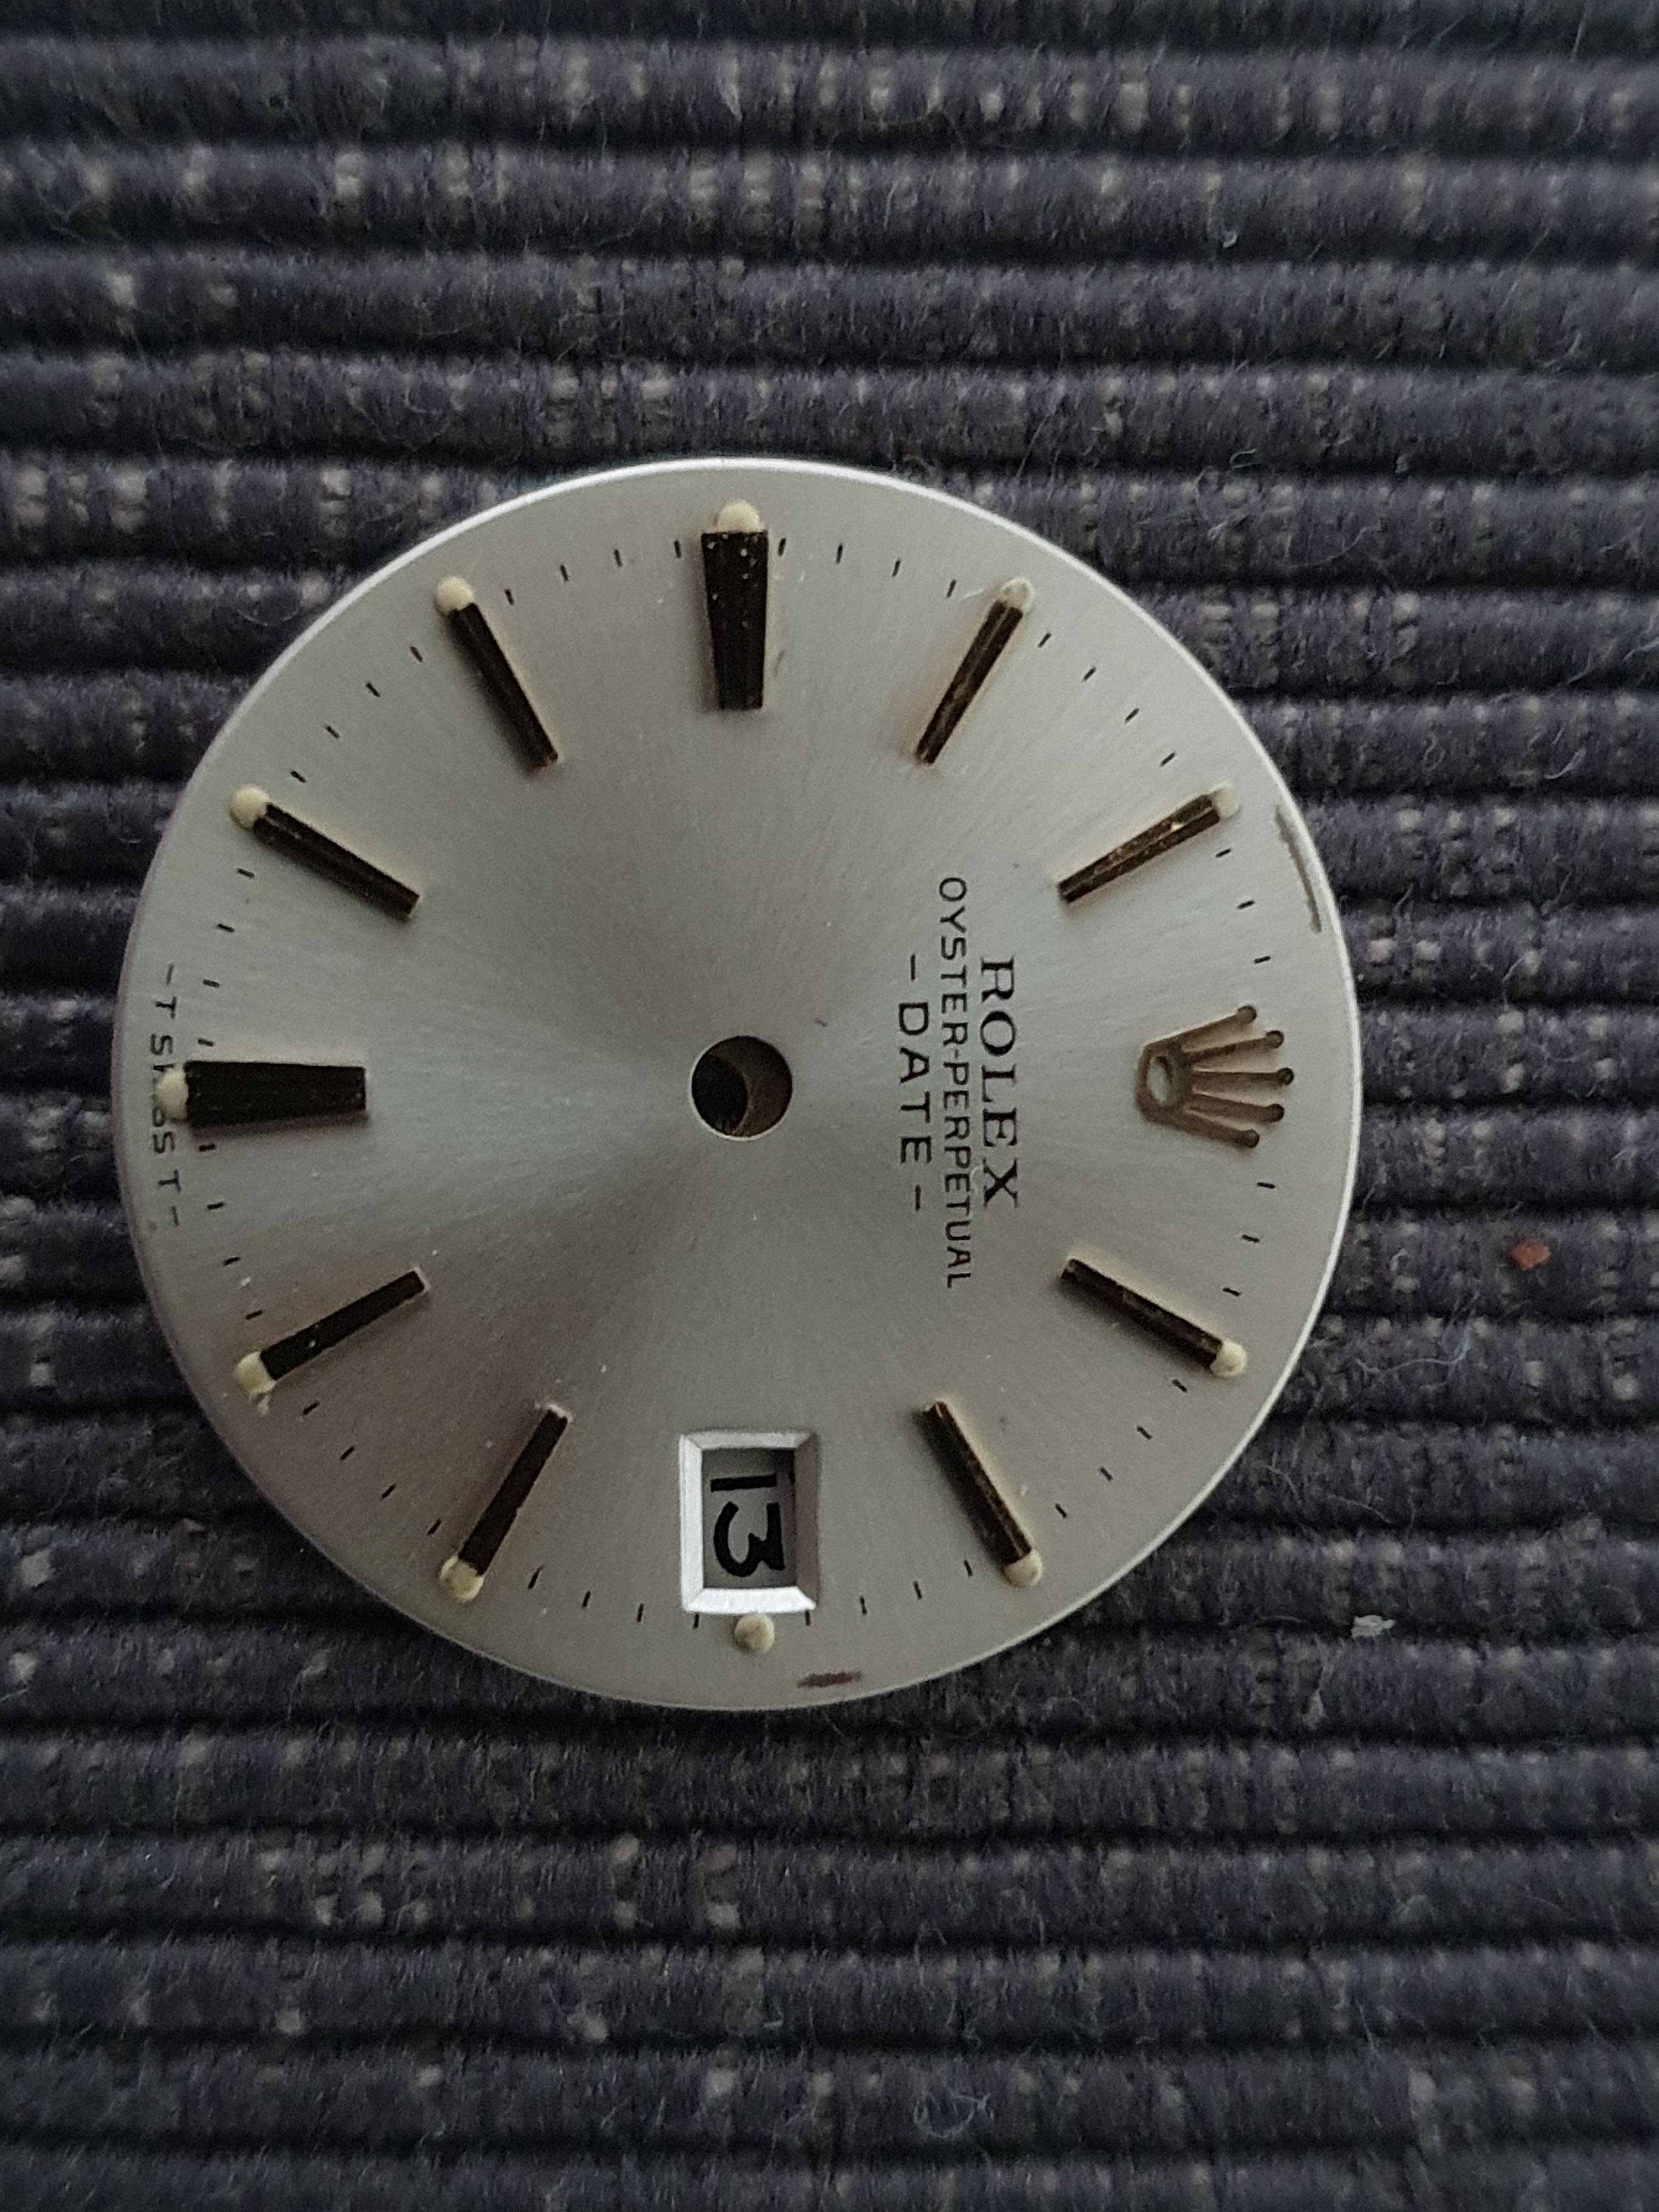 Genuine Rolex dial? - Watch Repairs Help & Advice - Watch Repair Talk